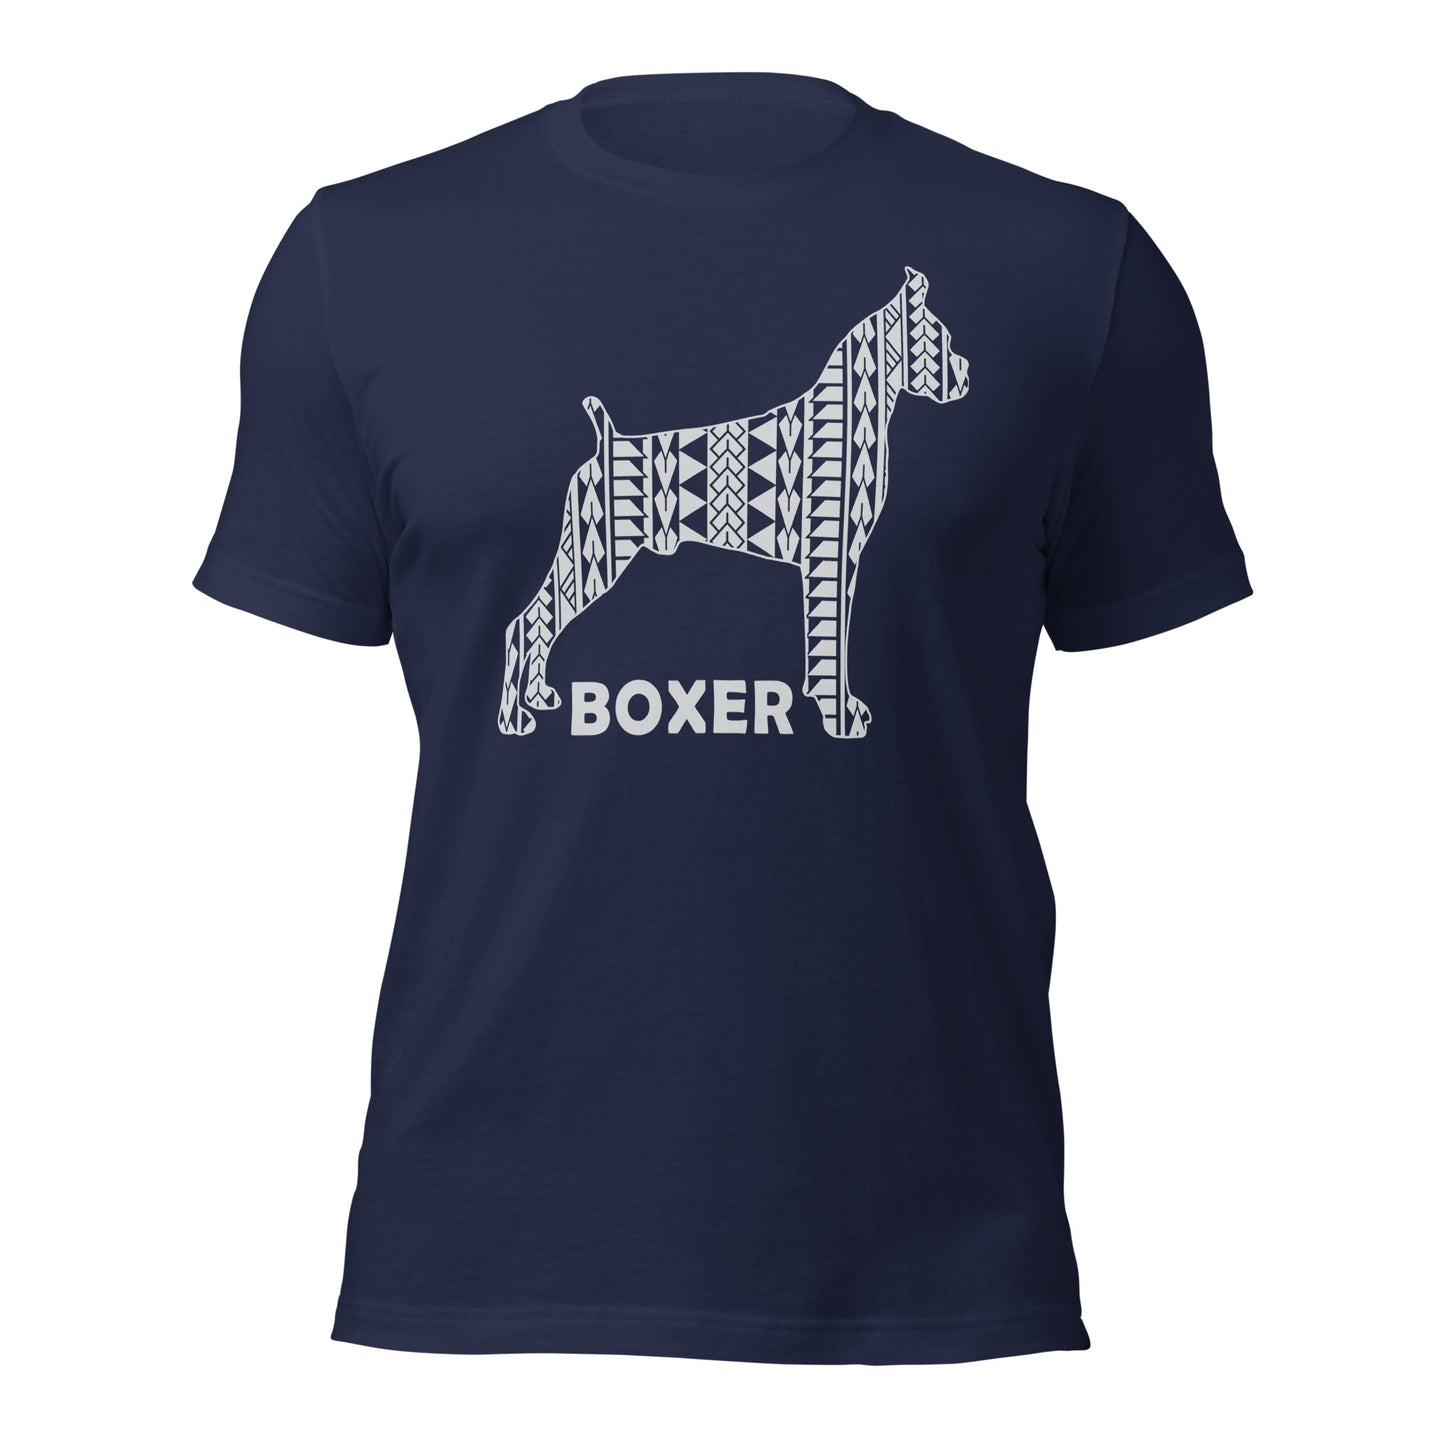 Boxer Polynesian t-shirt navy by Dog Artistry.